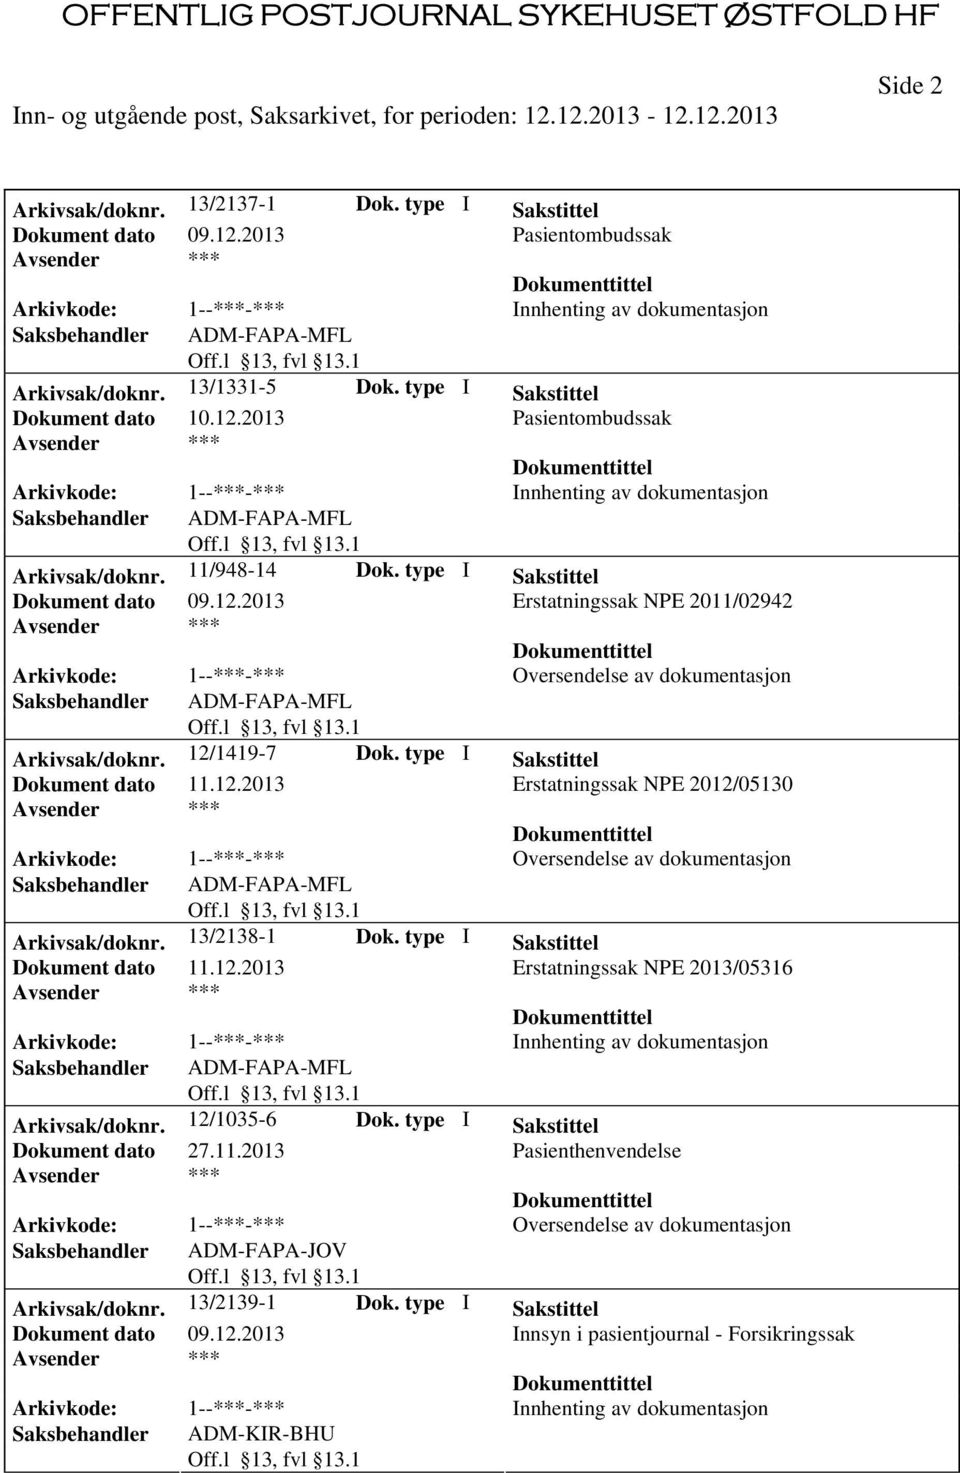 12/1419-7 Dok. type I Sakstittel Erstatningssak NPE 2012/05130 Arkivsak/doknr. 13/2138-1 Dok.